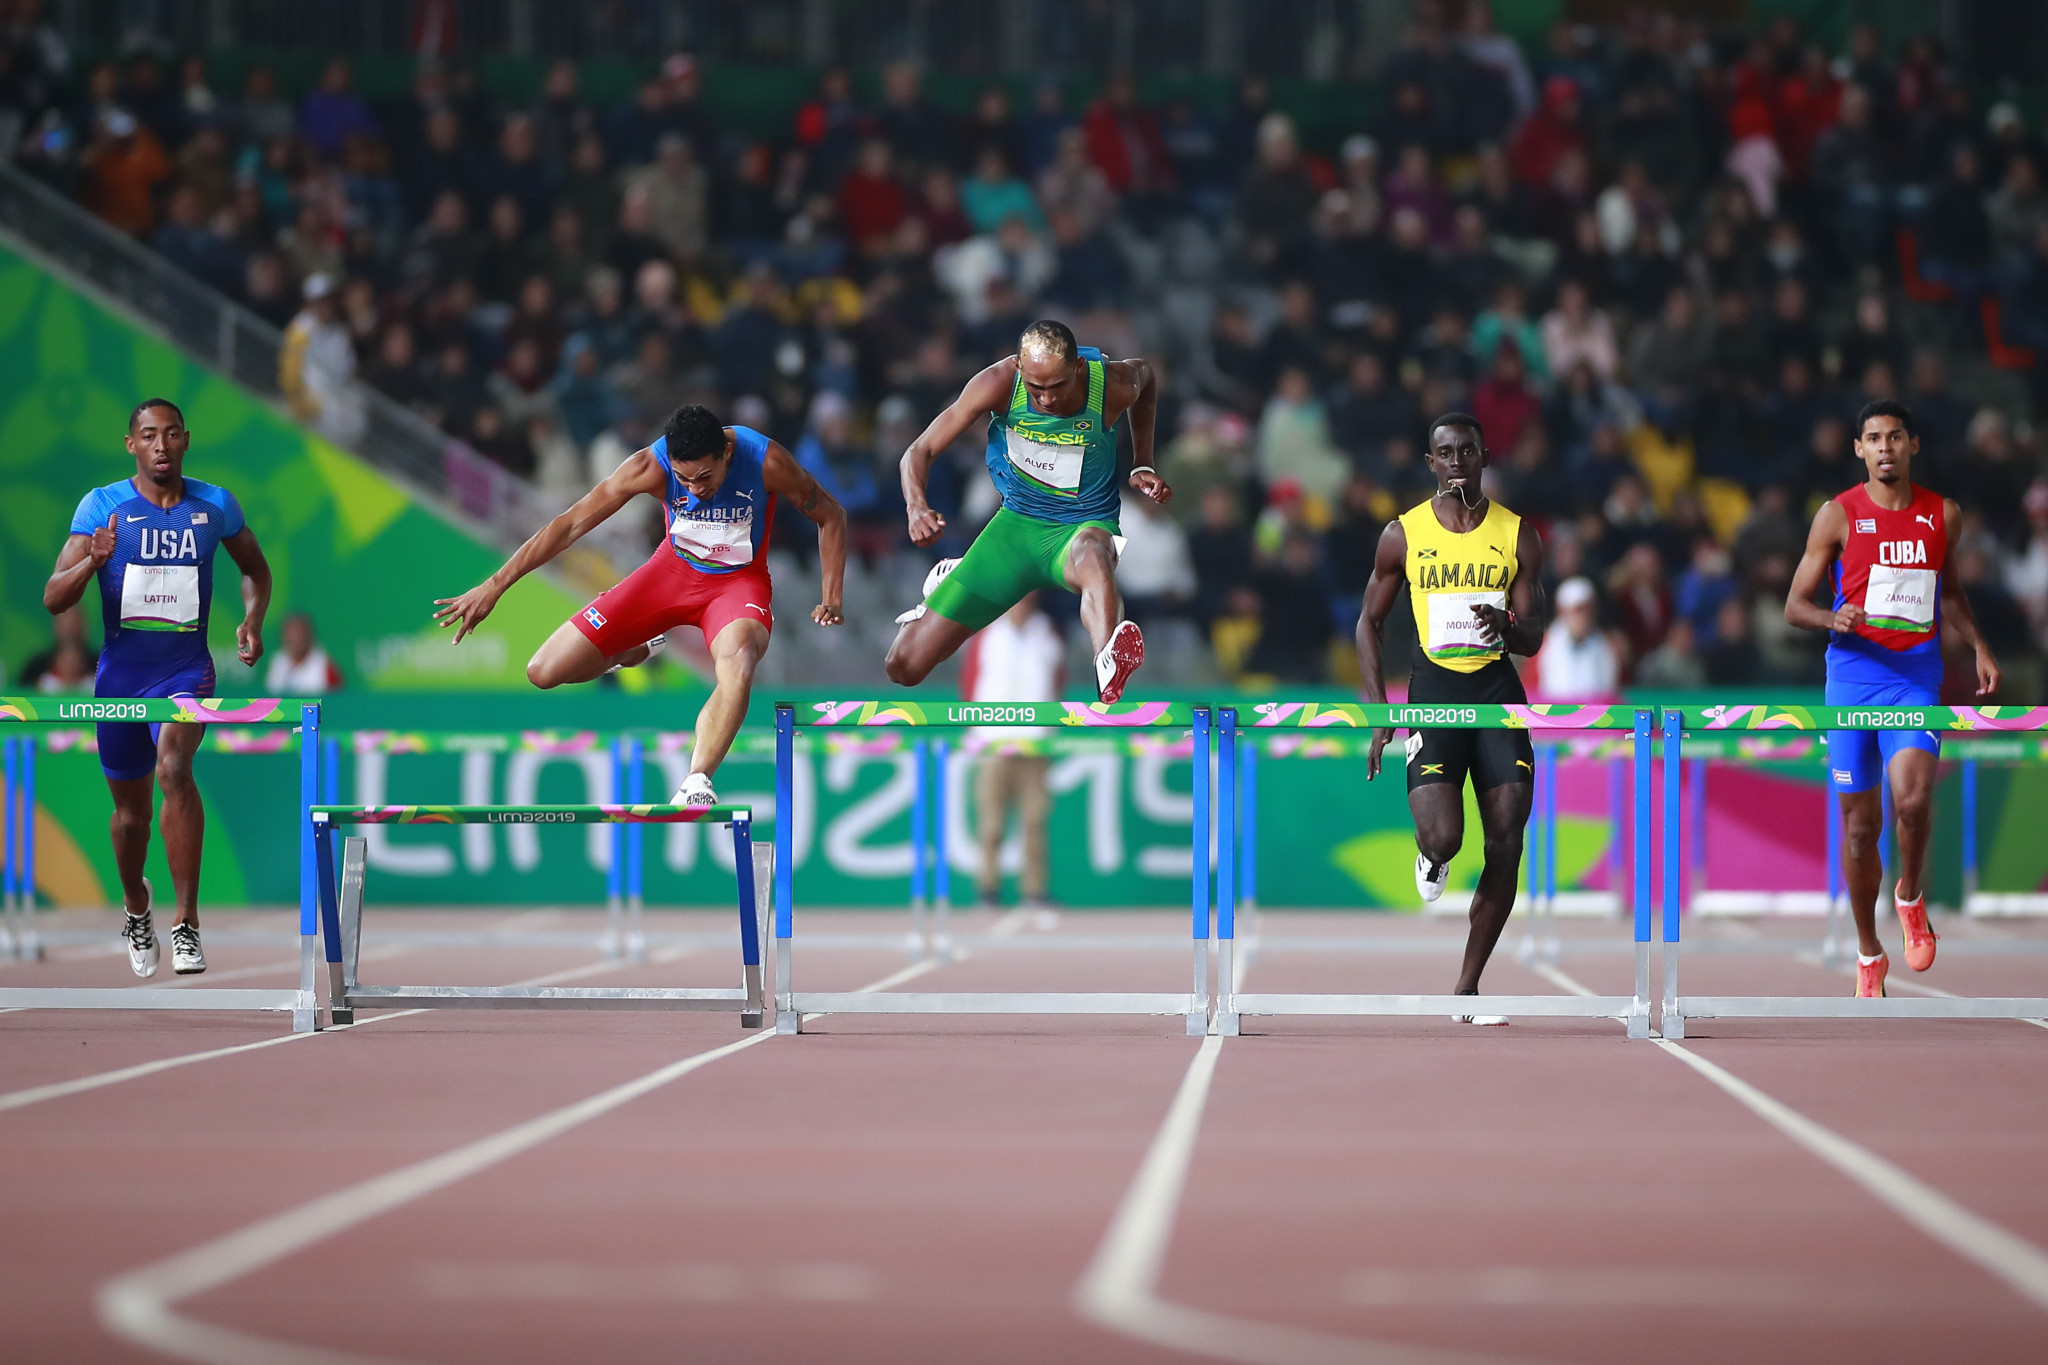 Santos stumbles in hurdles as athletics continues at Lima 2019